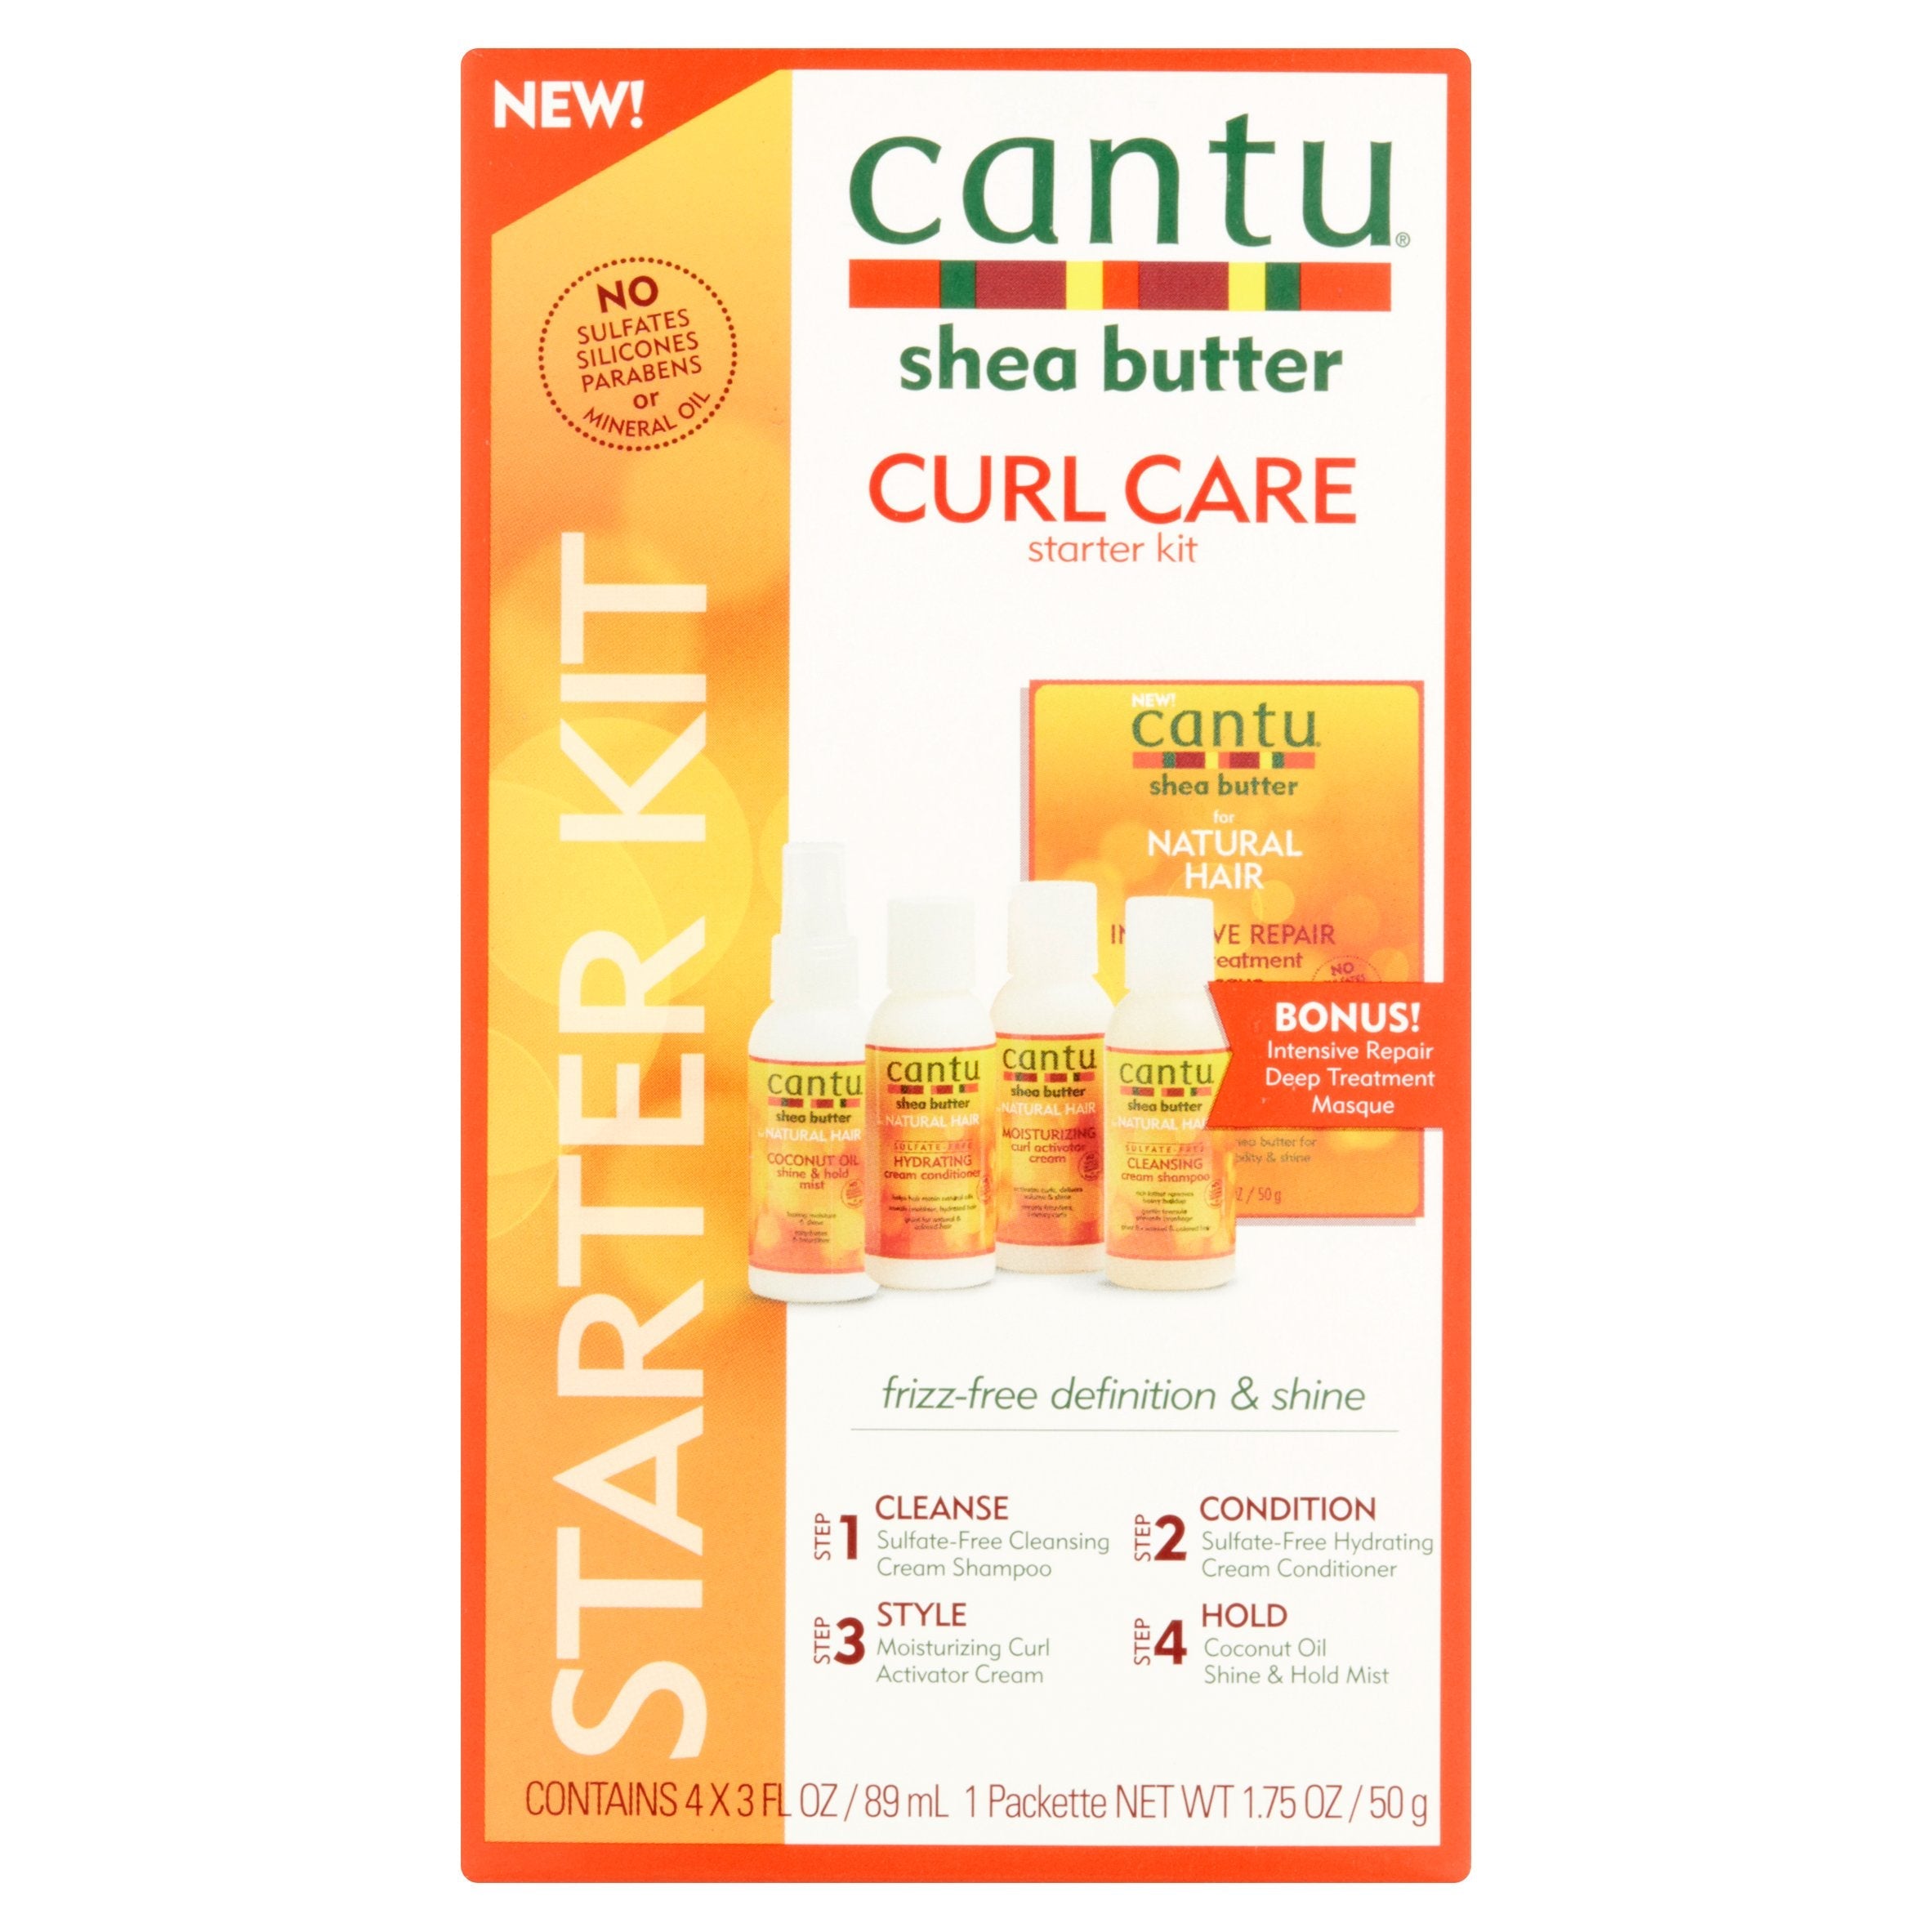 Cantu Shea Butter Natural Curl Care Kit | AFRS119